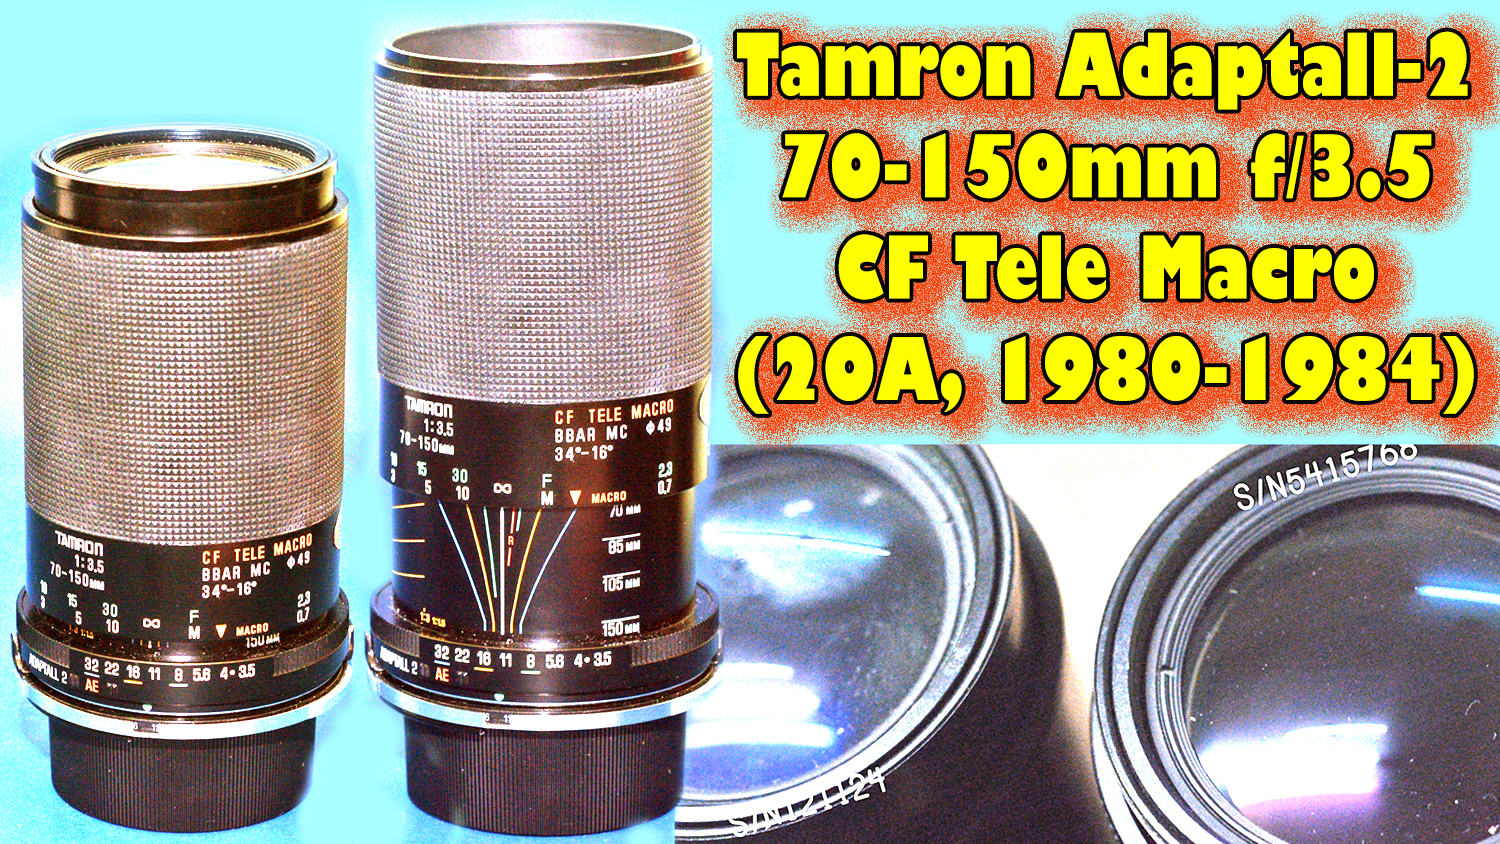 Tamron Adaptall-2 70-150mm f/3.5 CF Tele Macro BBAR MC (Model 20A, 1980-1984)